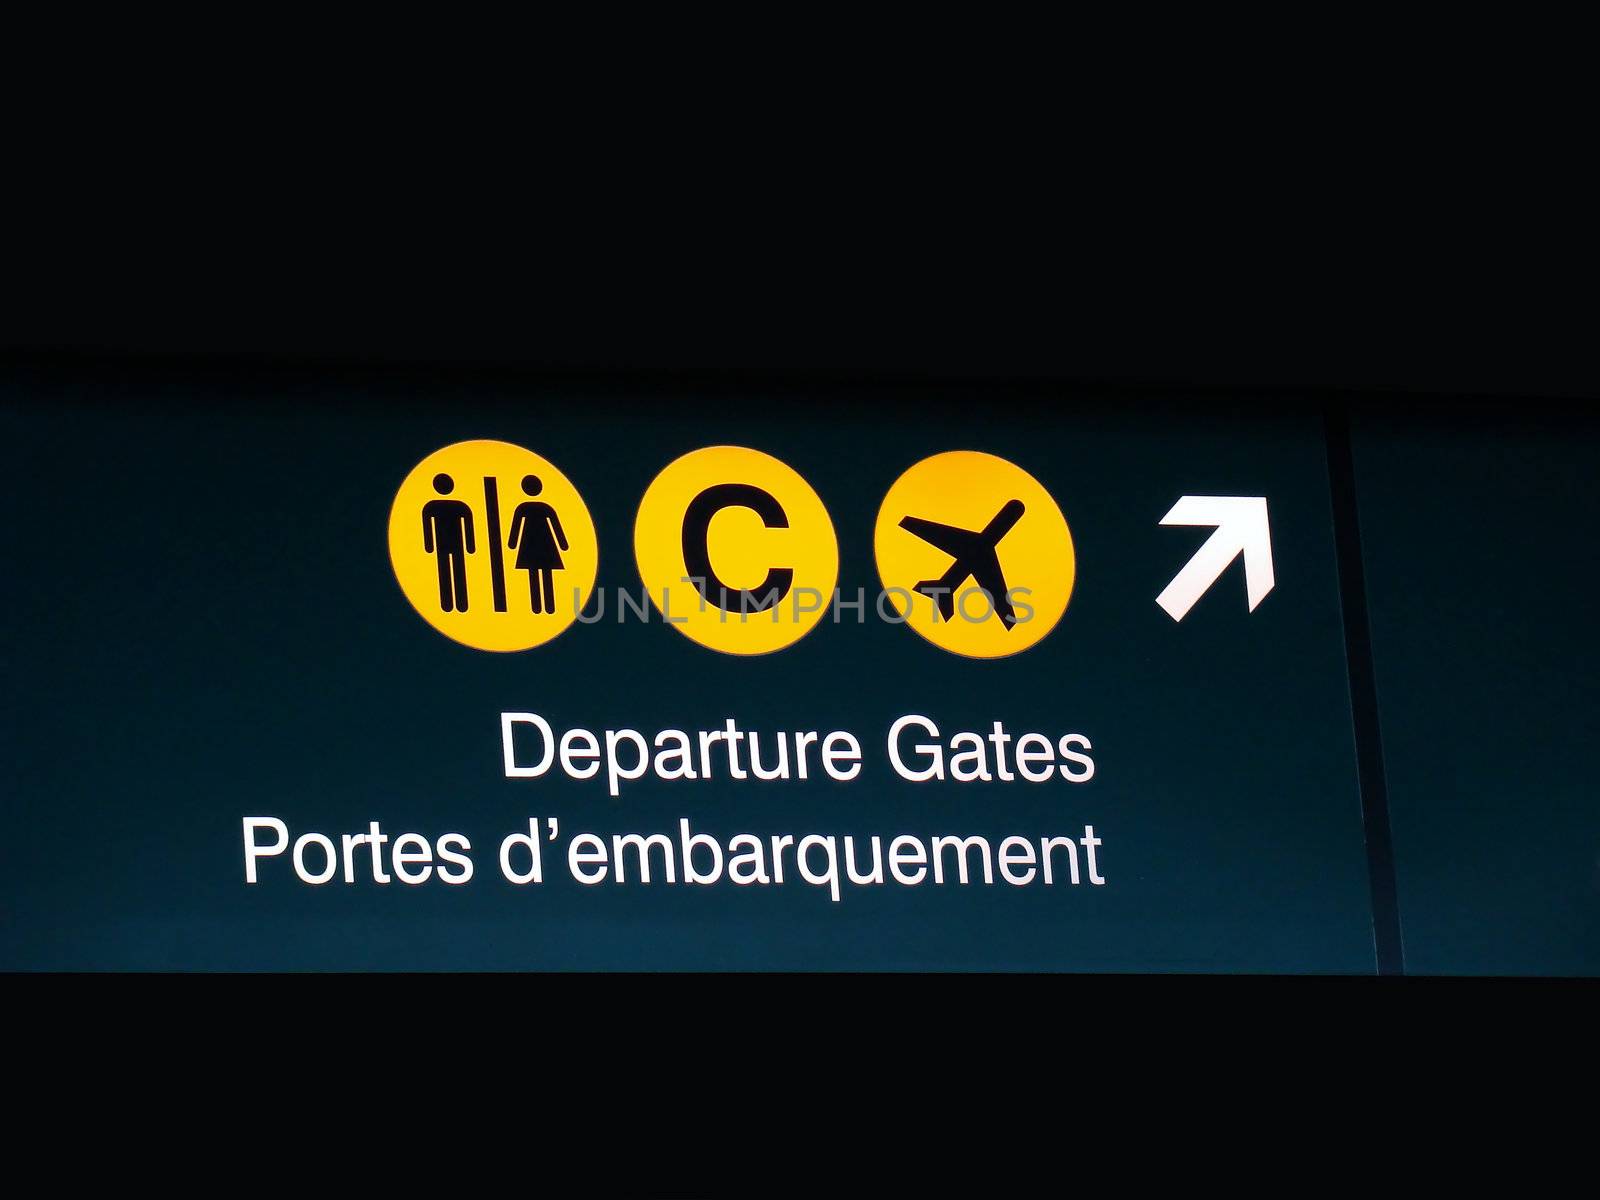 Departure gates sign, Canadian International Airport